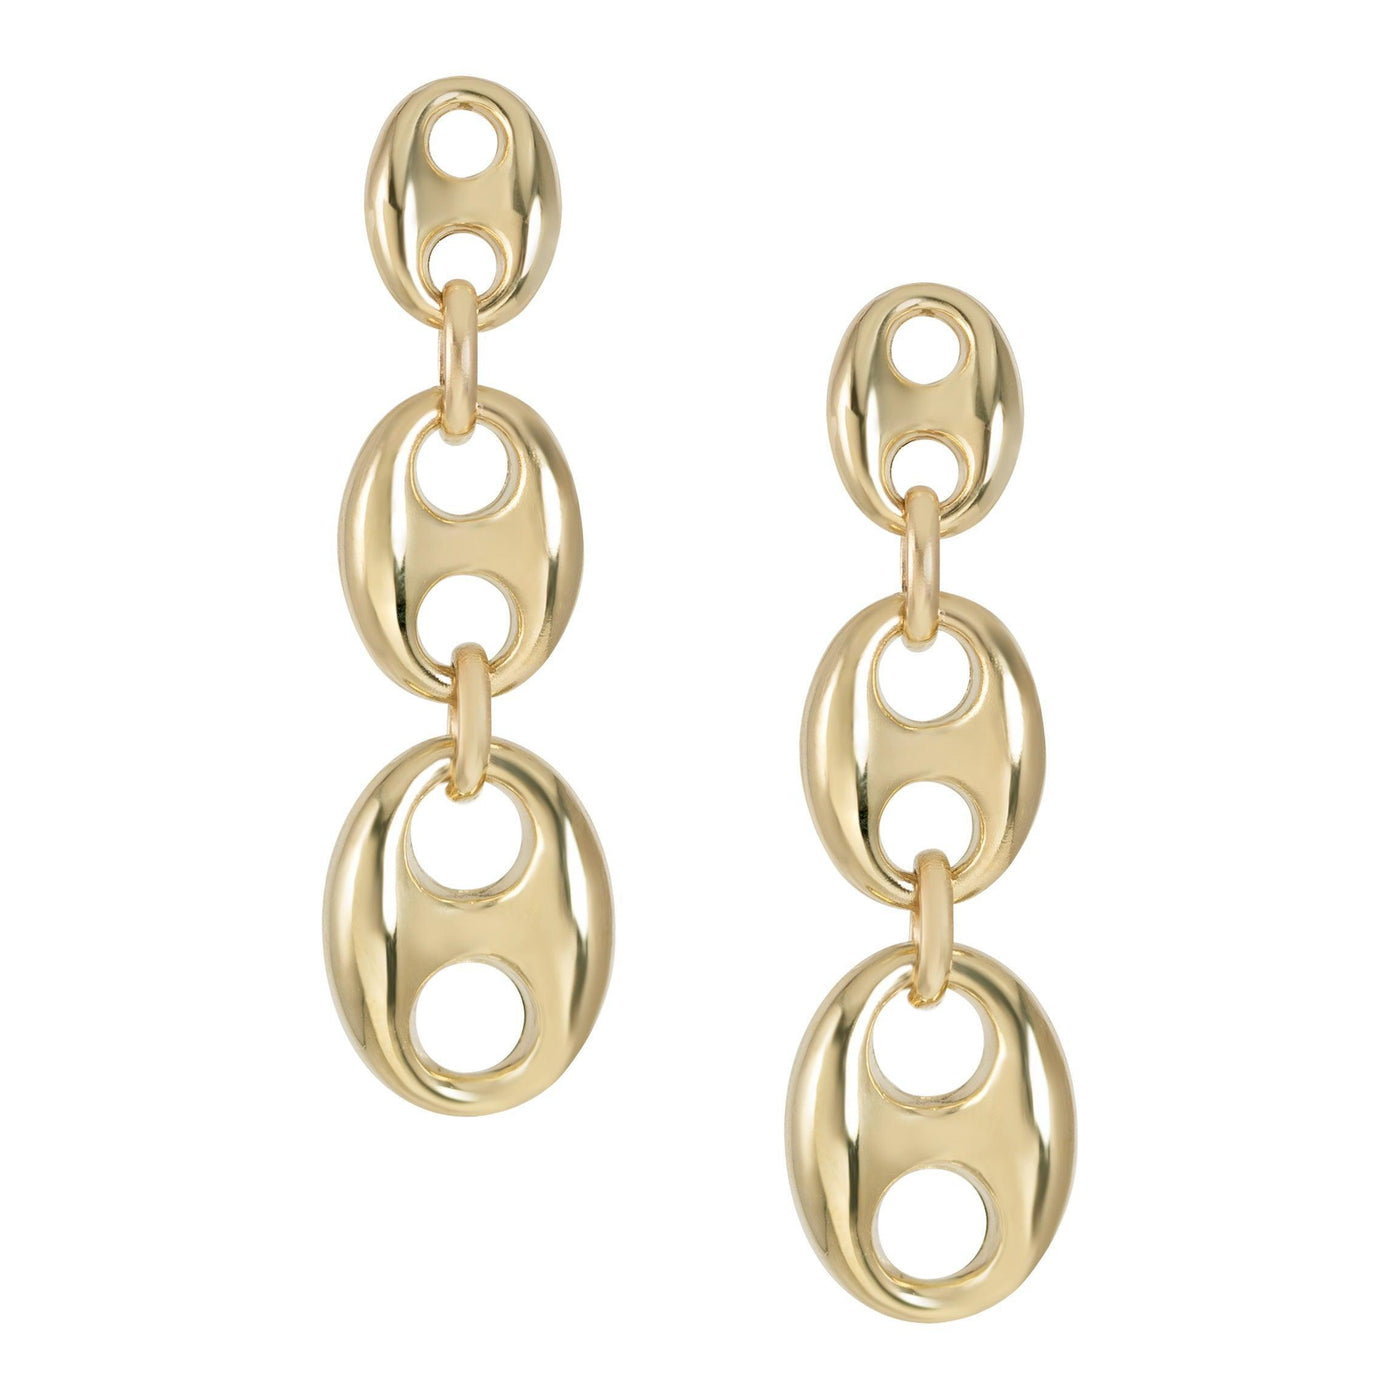 1 1/2 Graduated Puffed Gucci Link Chain Dangle Earrings 10K Yellow Gold